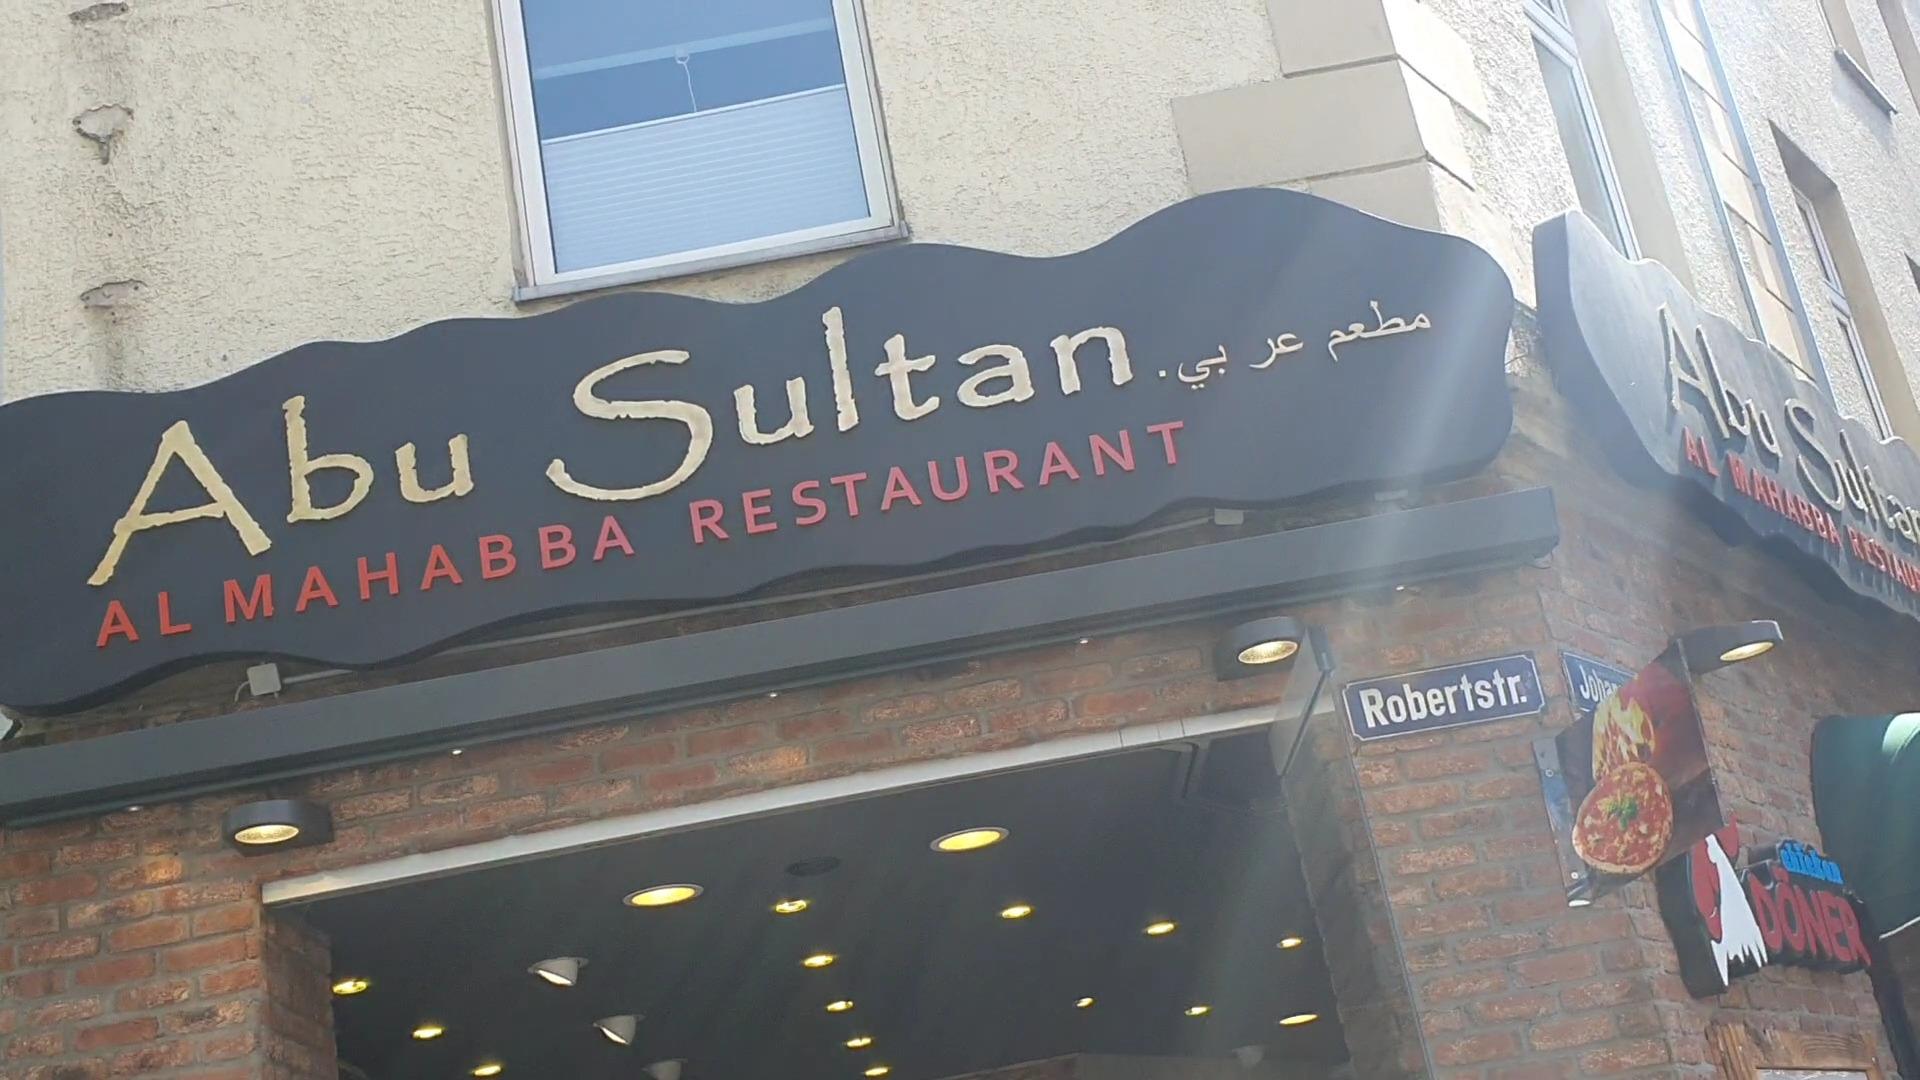 Almahabba Restaurant  Abu Sultan, Robertstrasse 3 in Köln